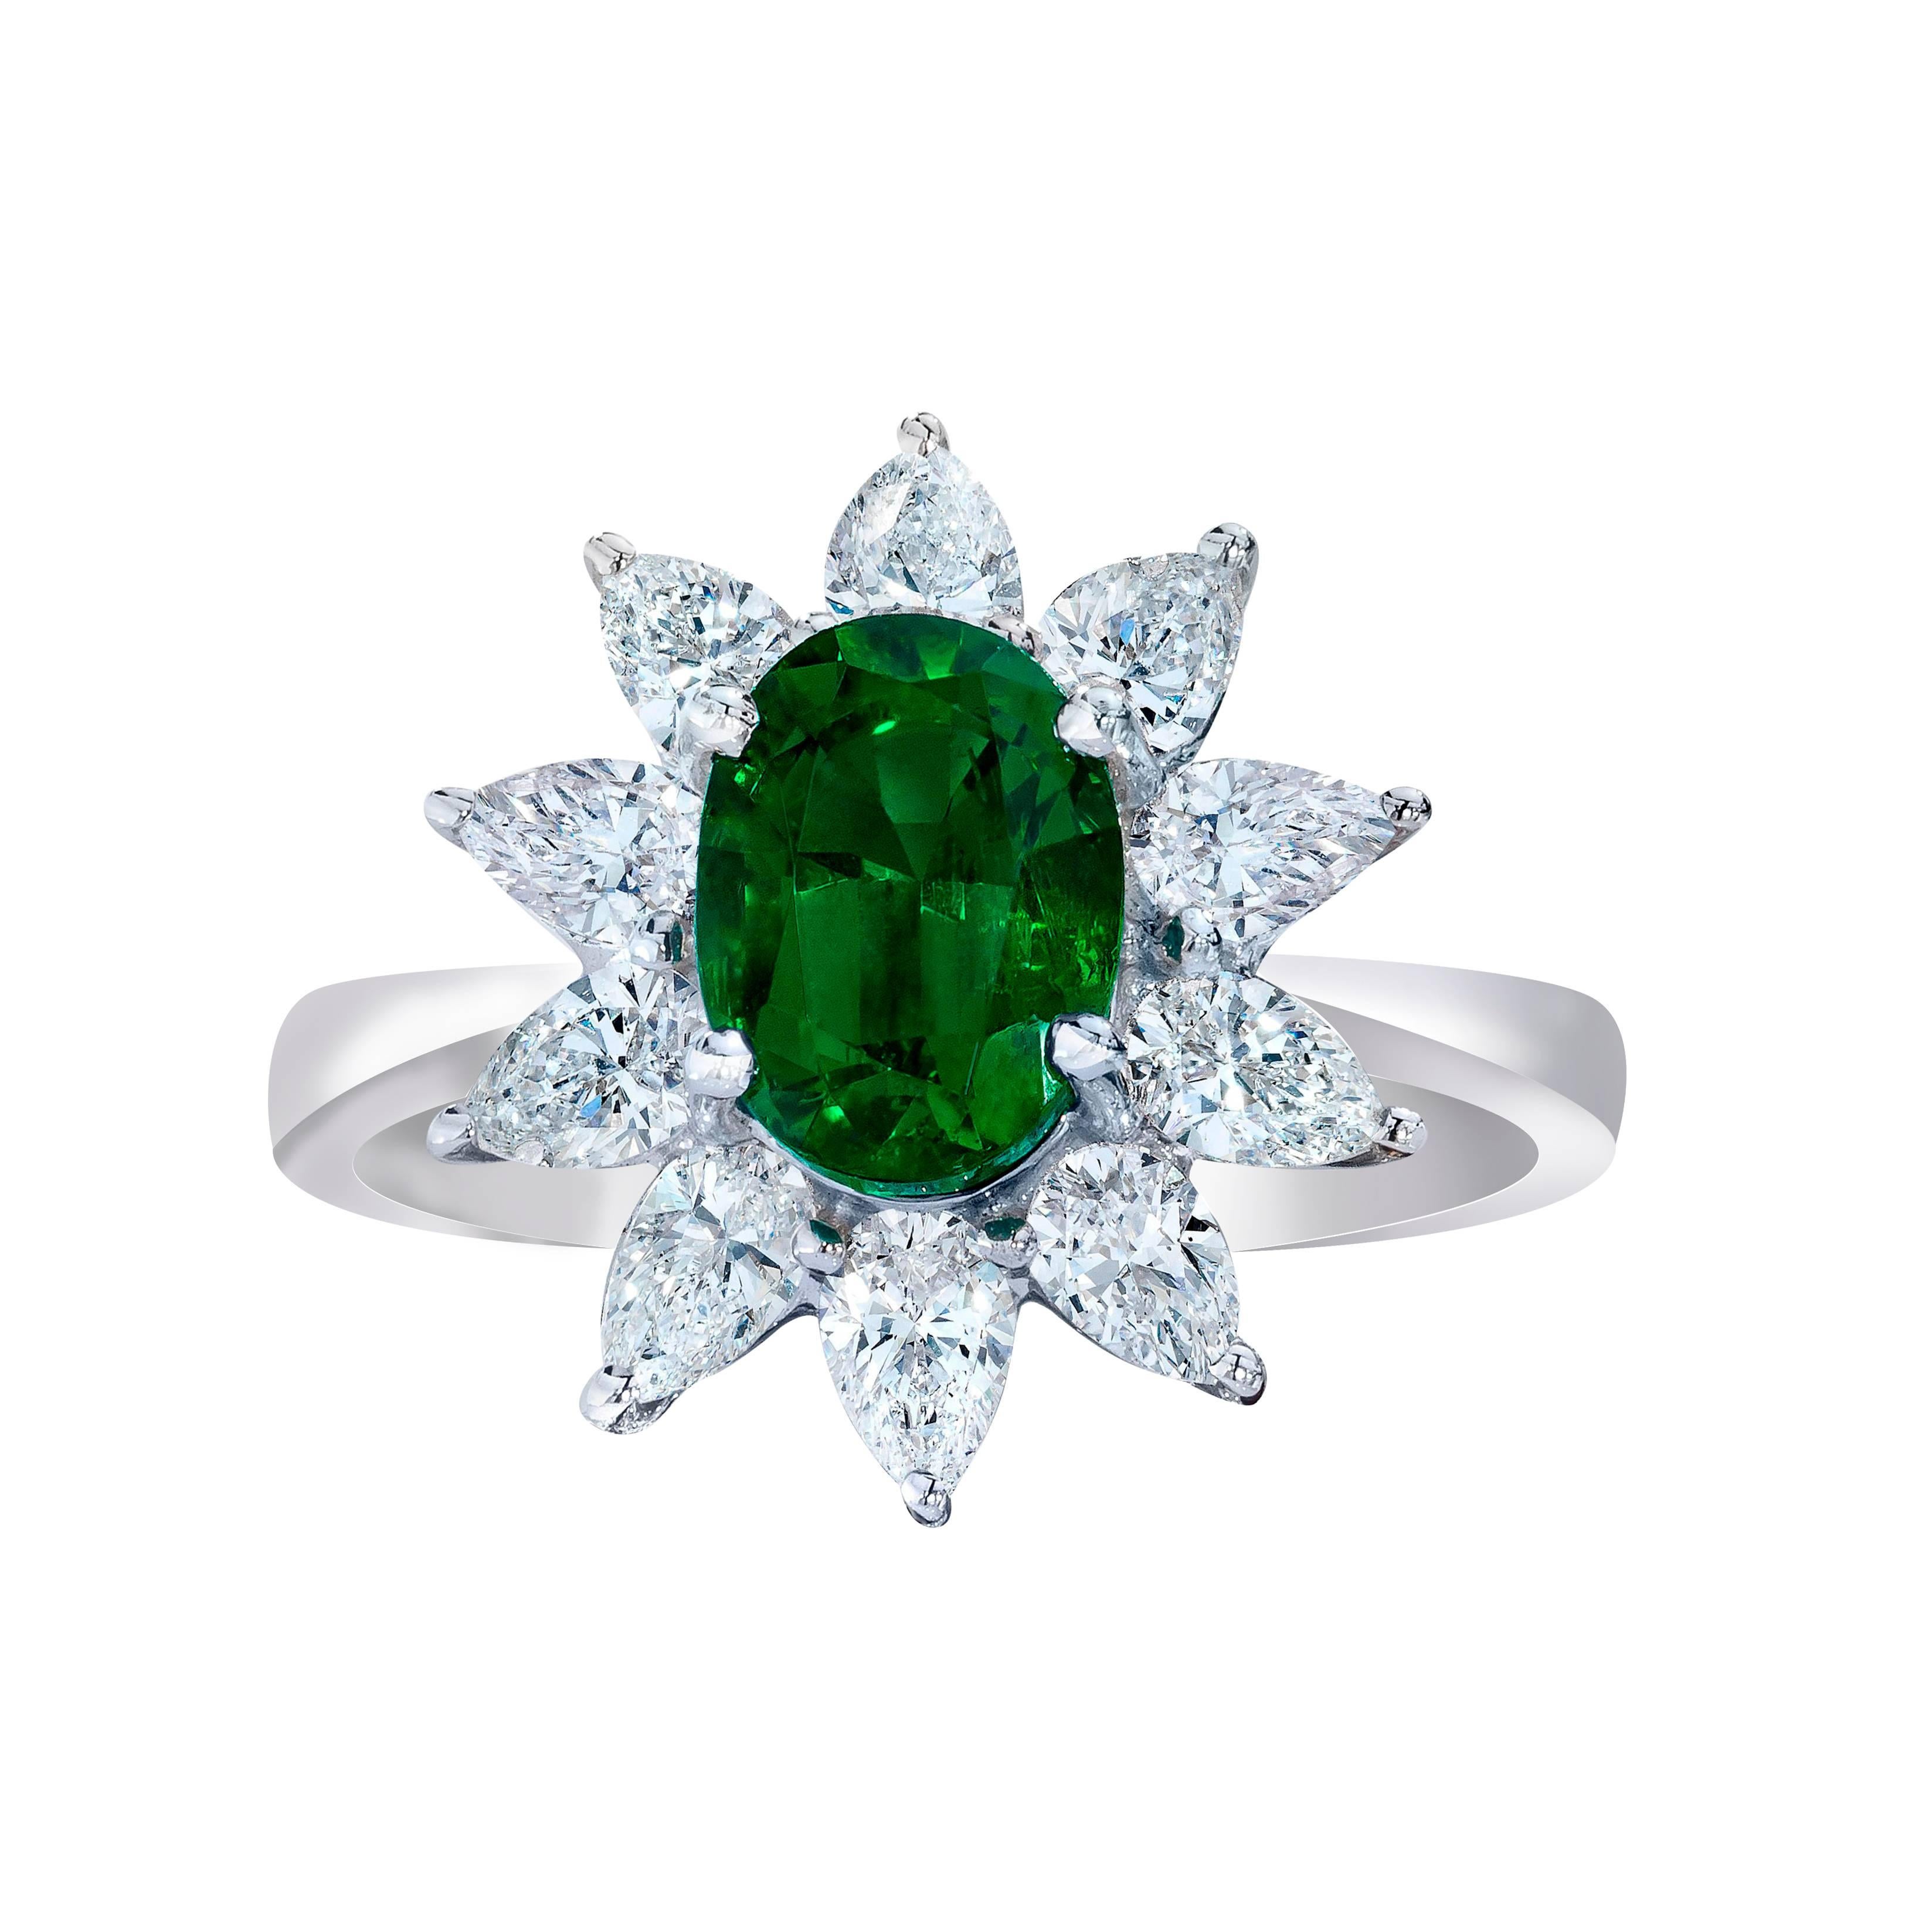 Roman Malakov 1.48 Carats Oval Cut Green Emerald with Diamond Halo Floral Ring 